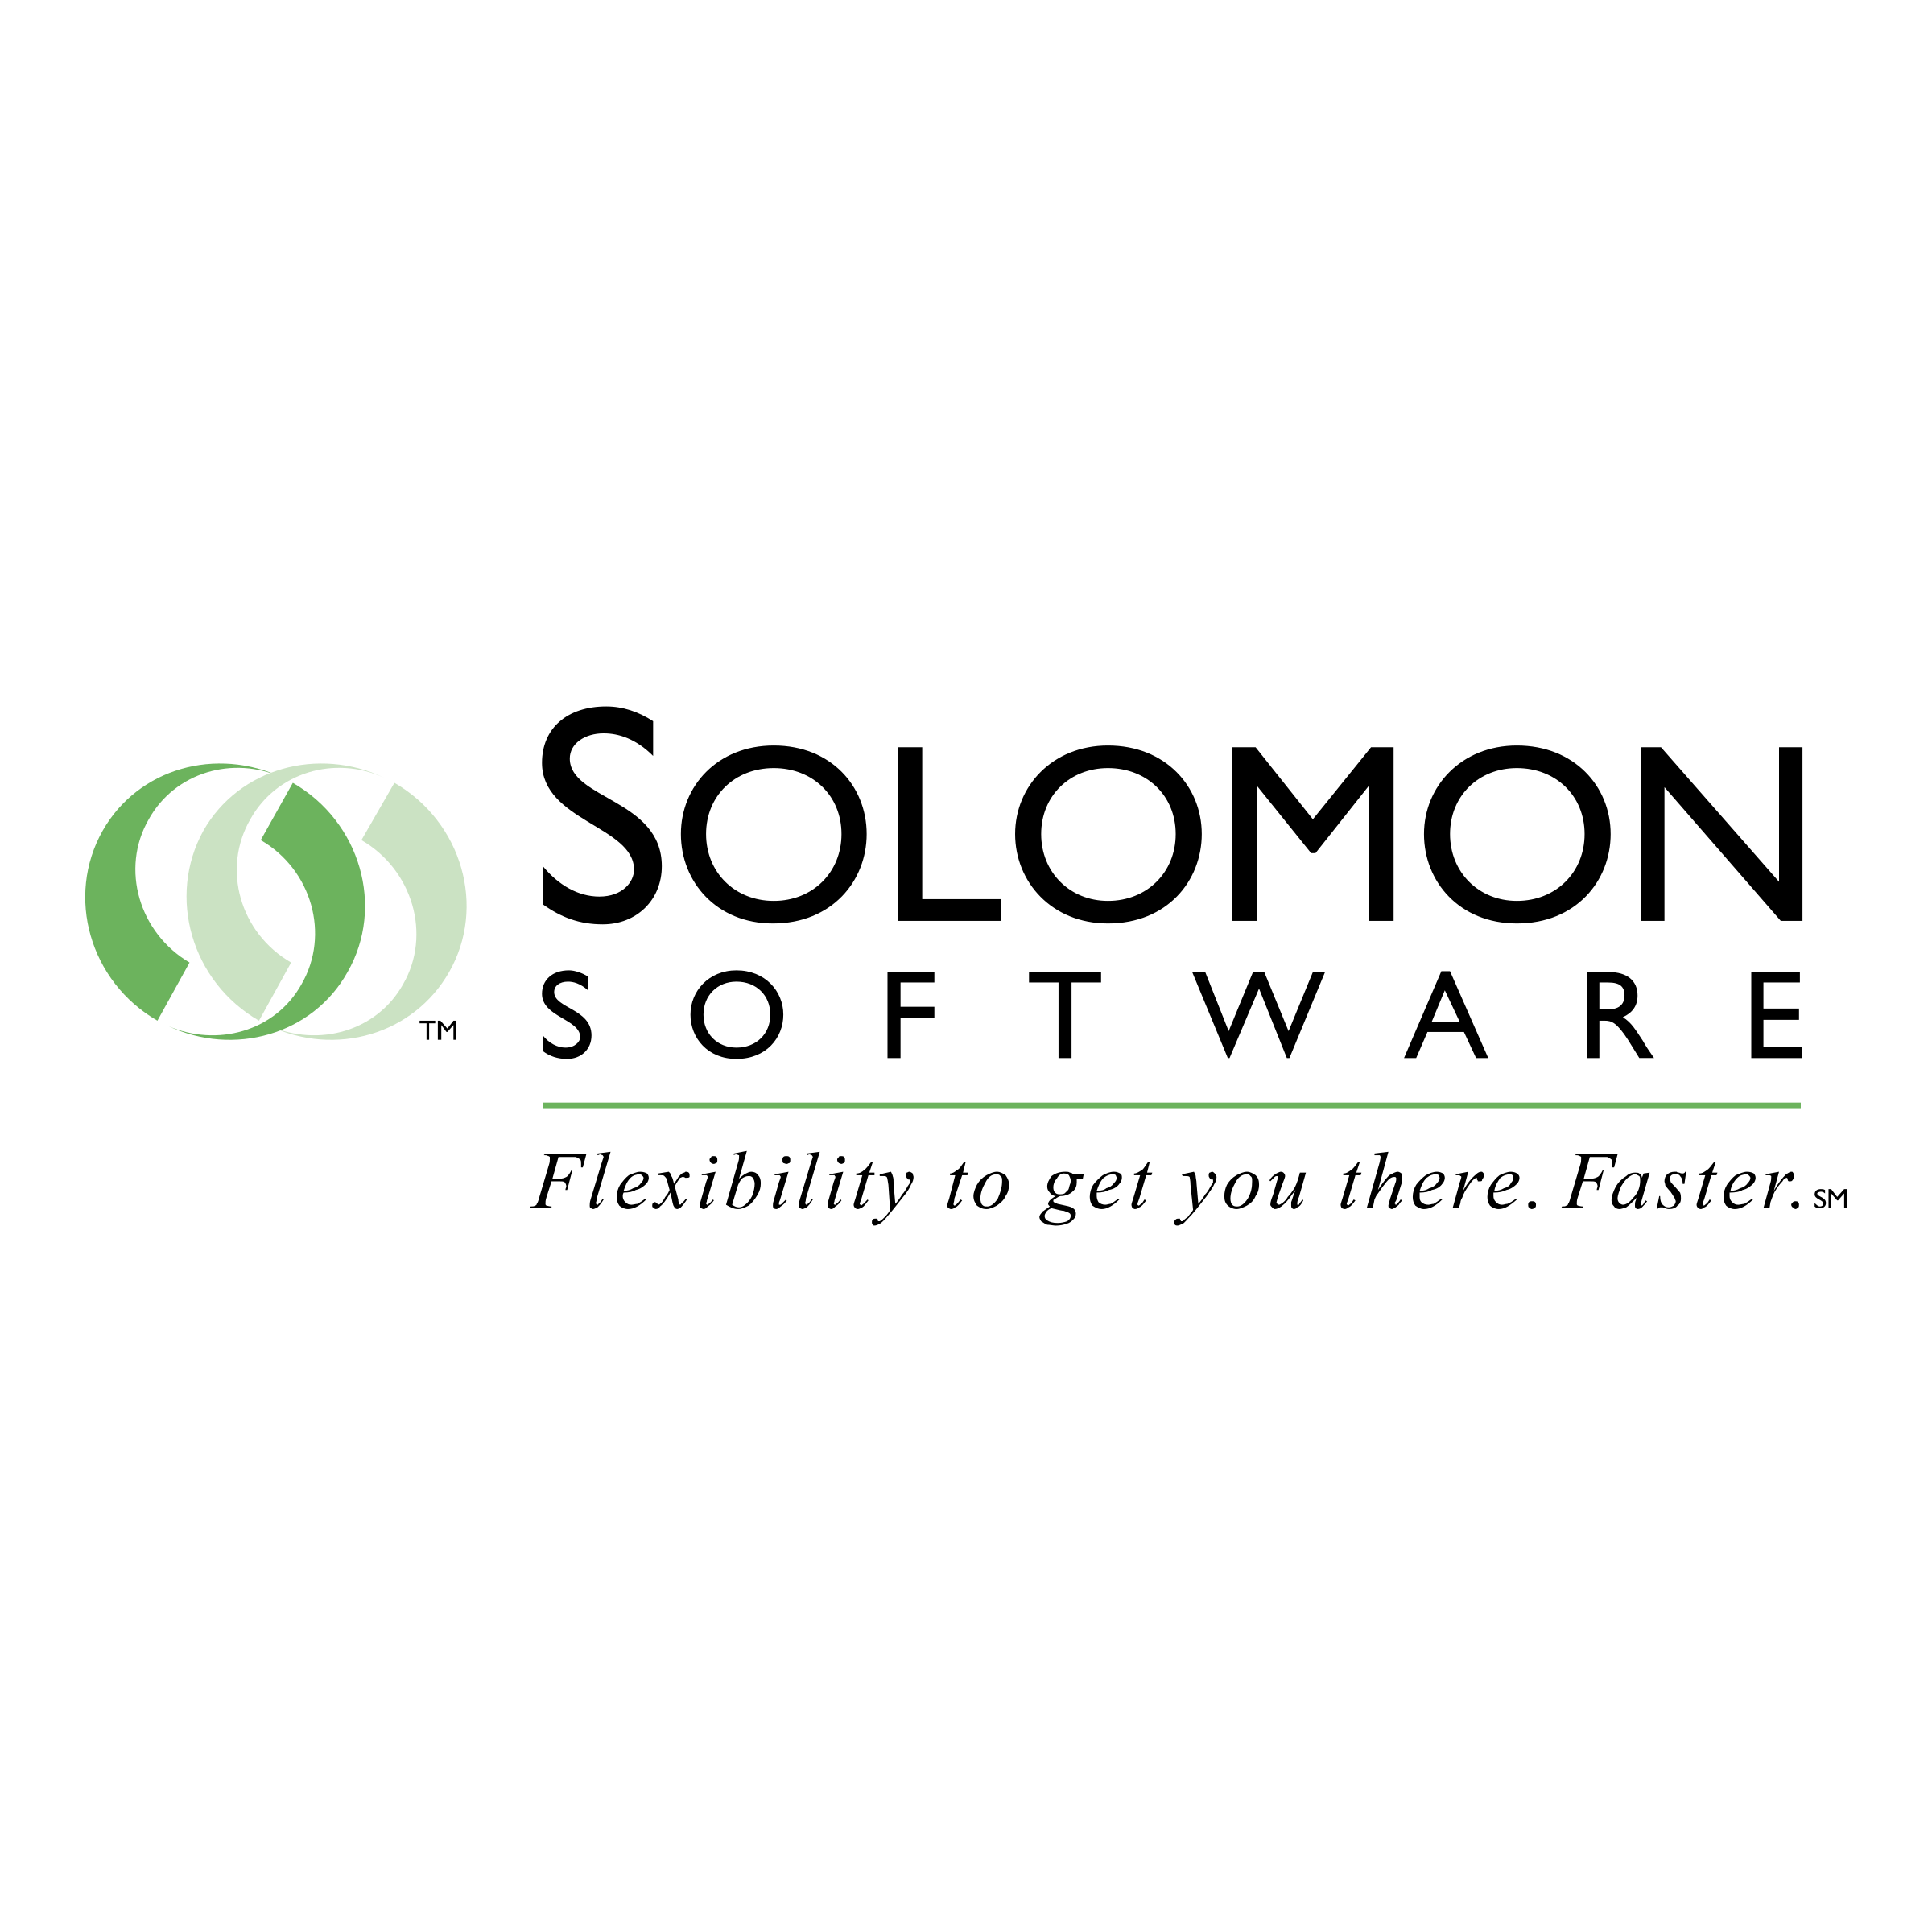 Solomon Logo - Solomon Software Logo PNG Transparent & SVG Vector